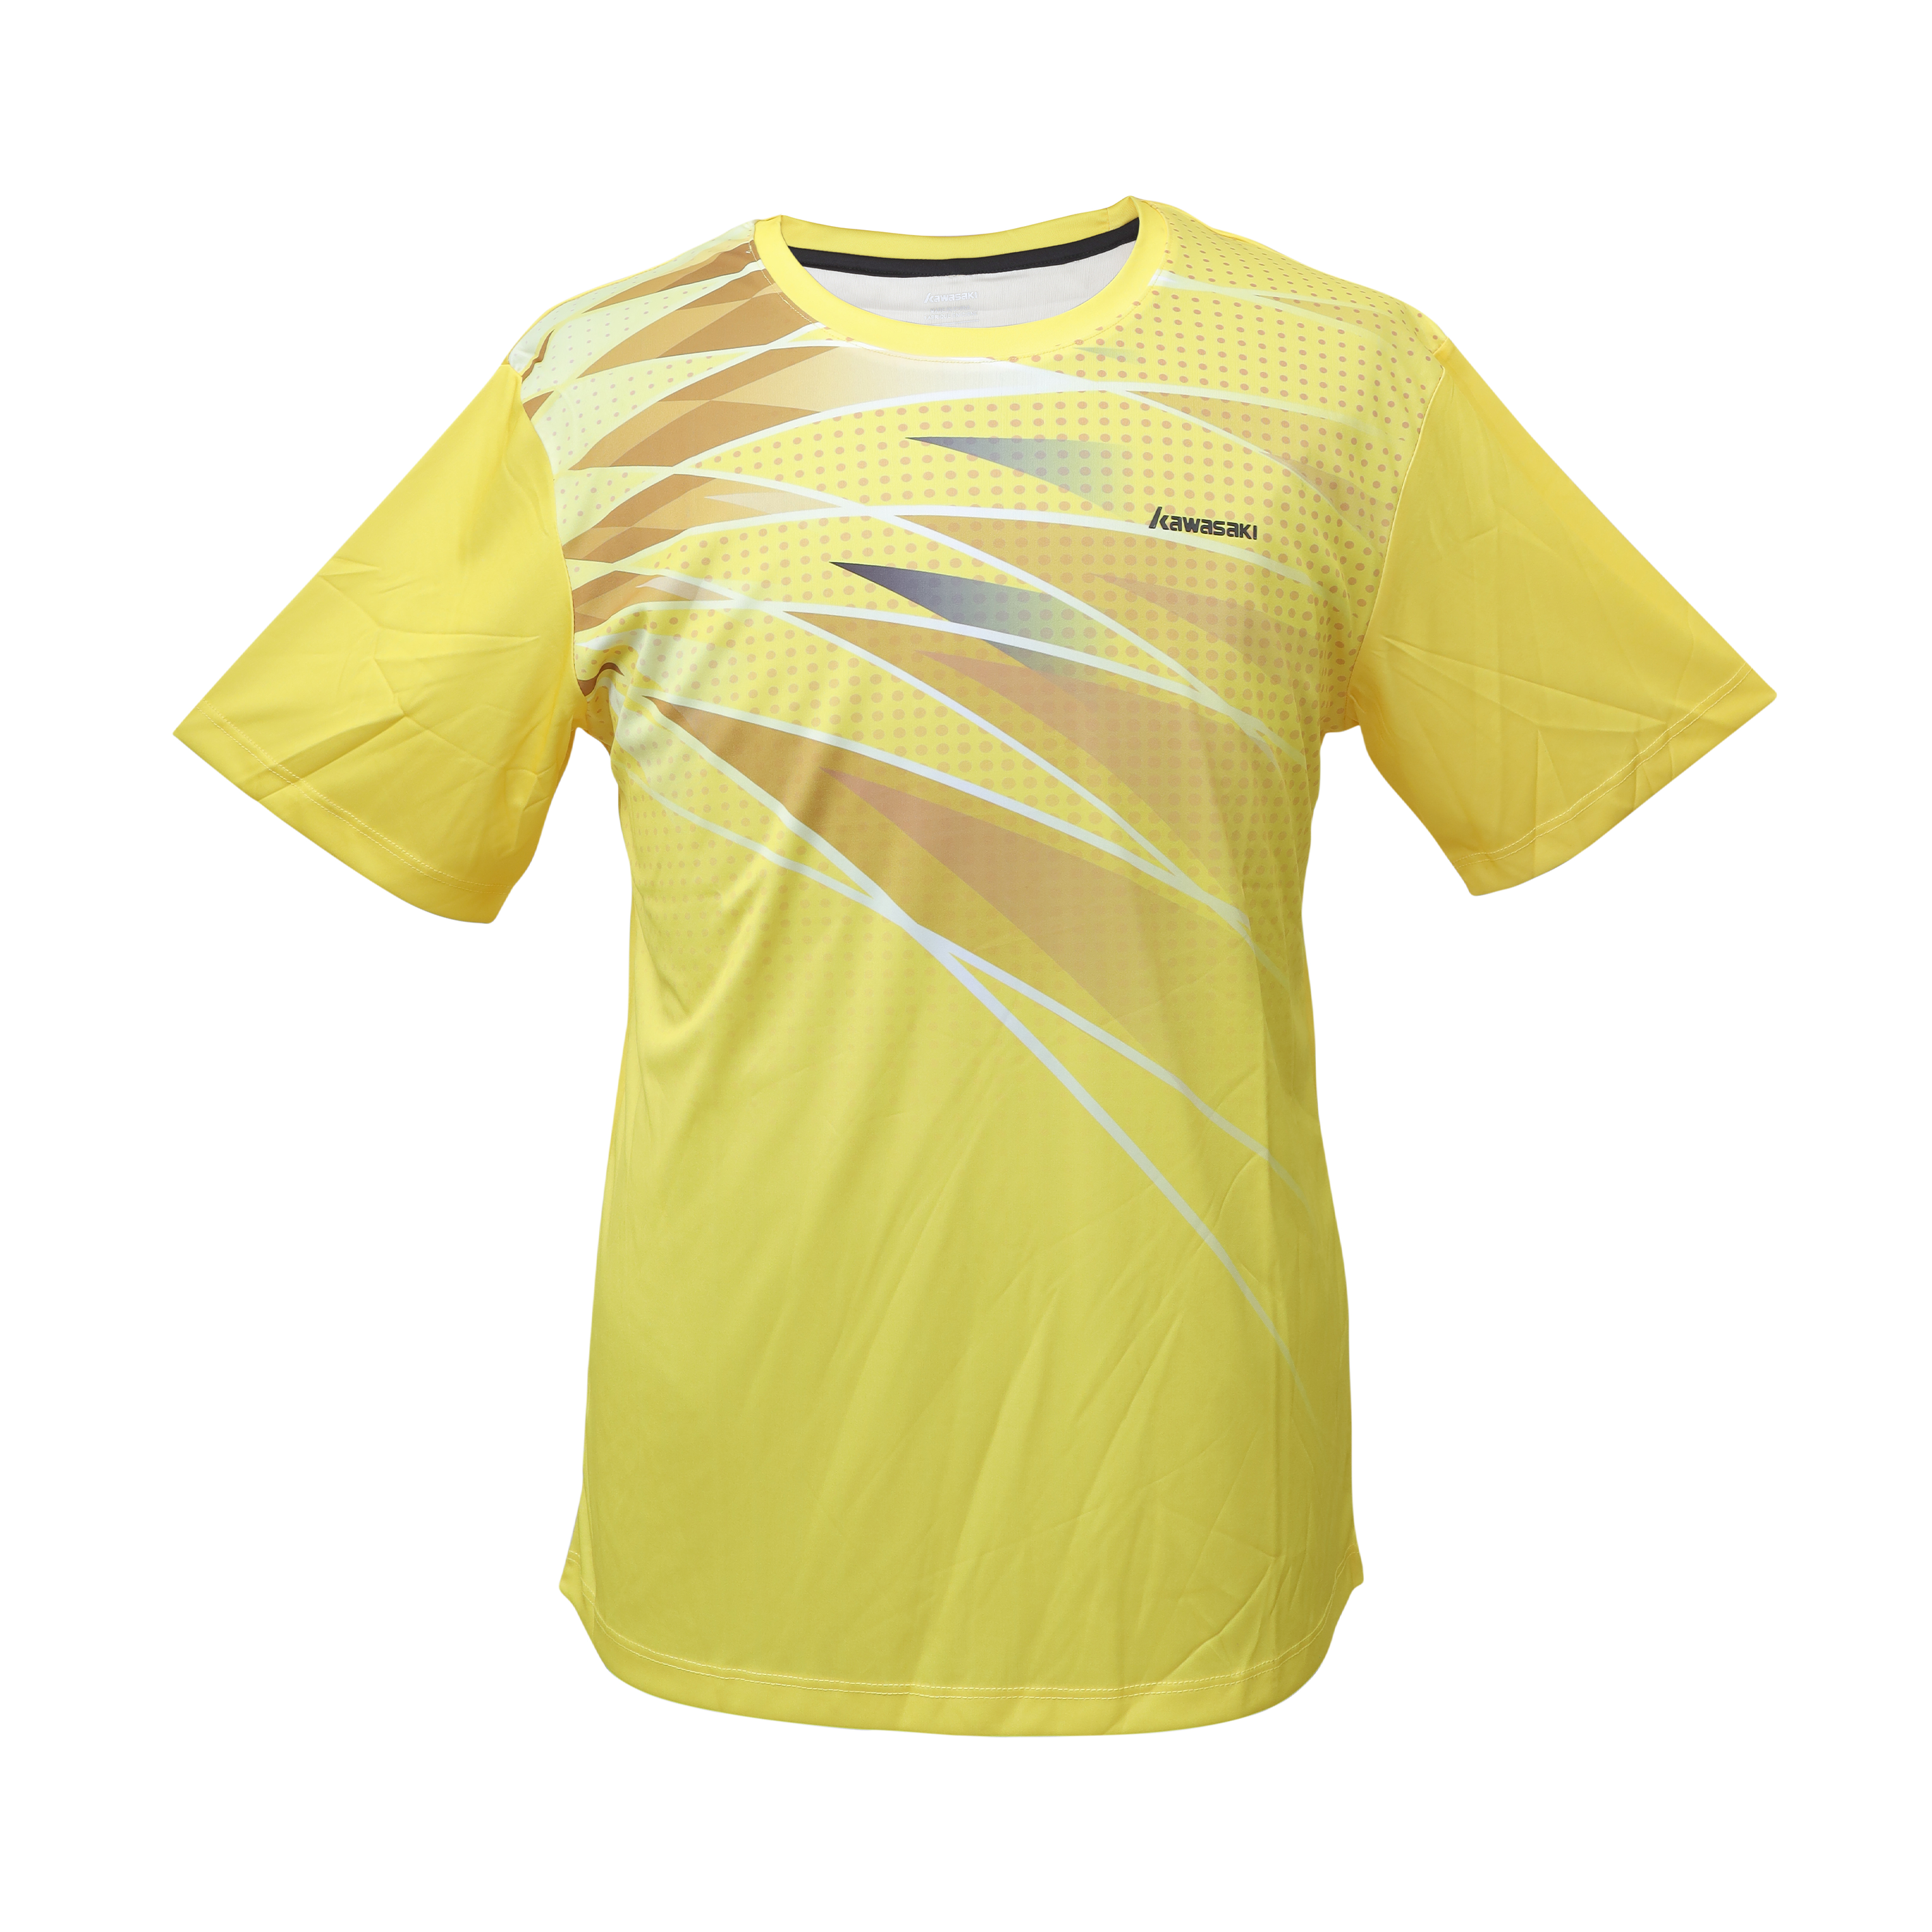 ST-171006A Men's Badminton T-Shirt (Yellow)